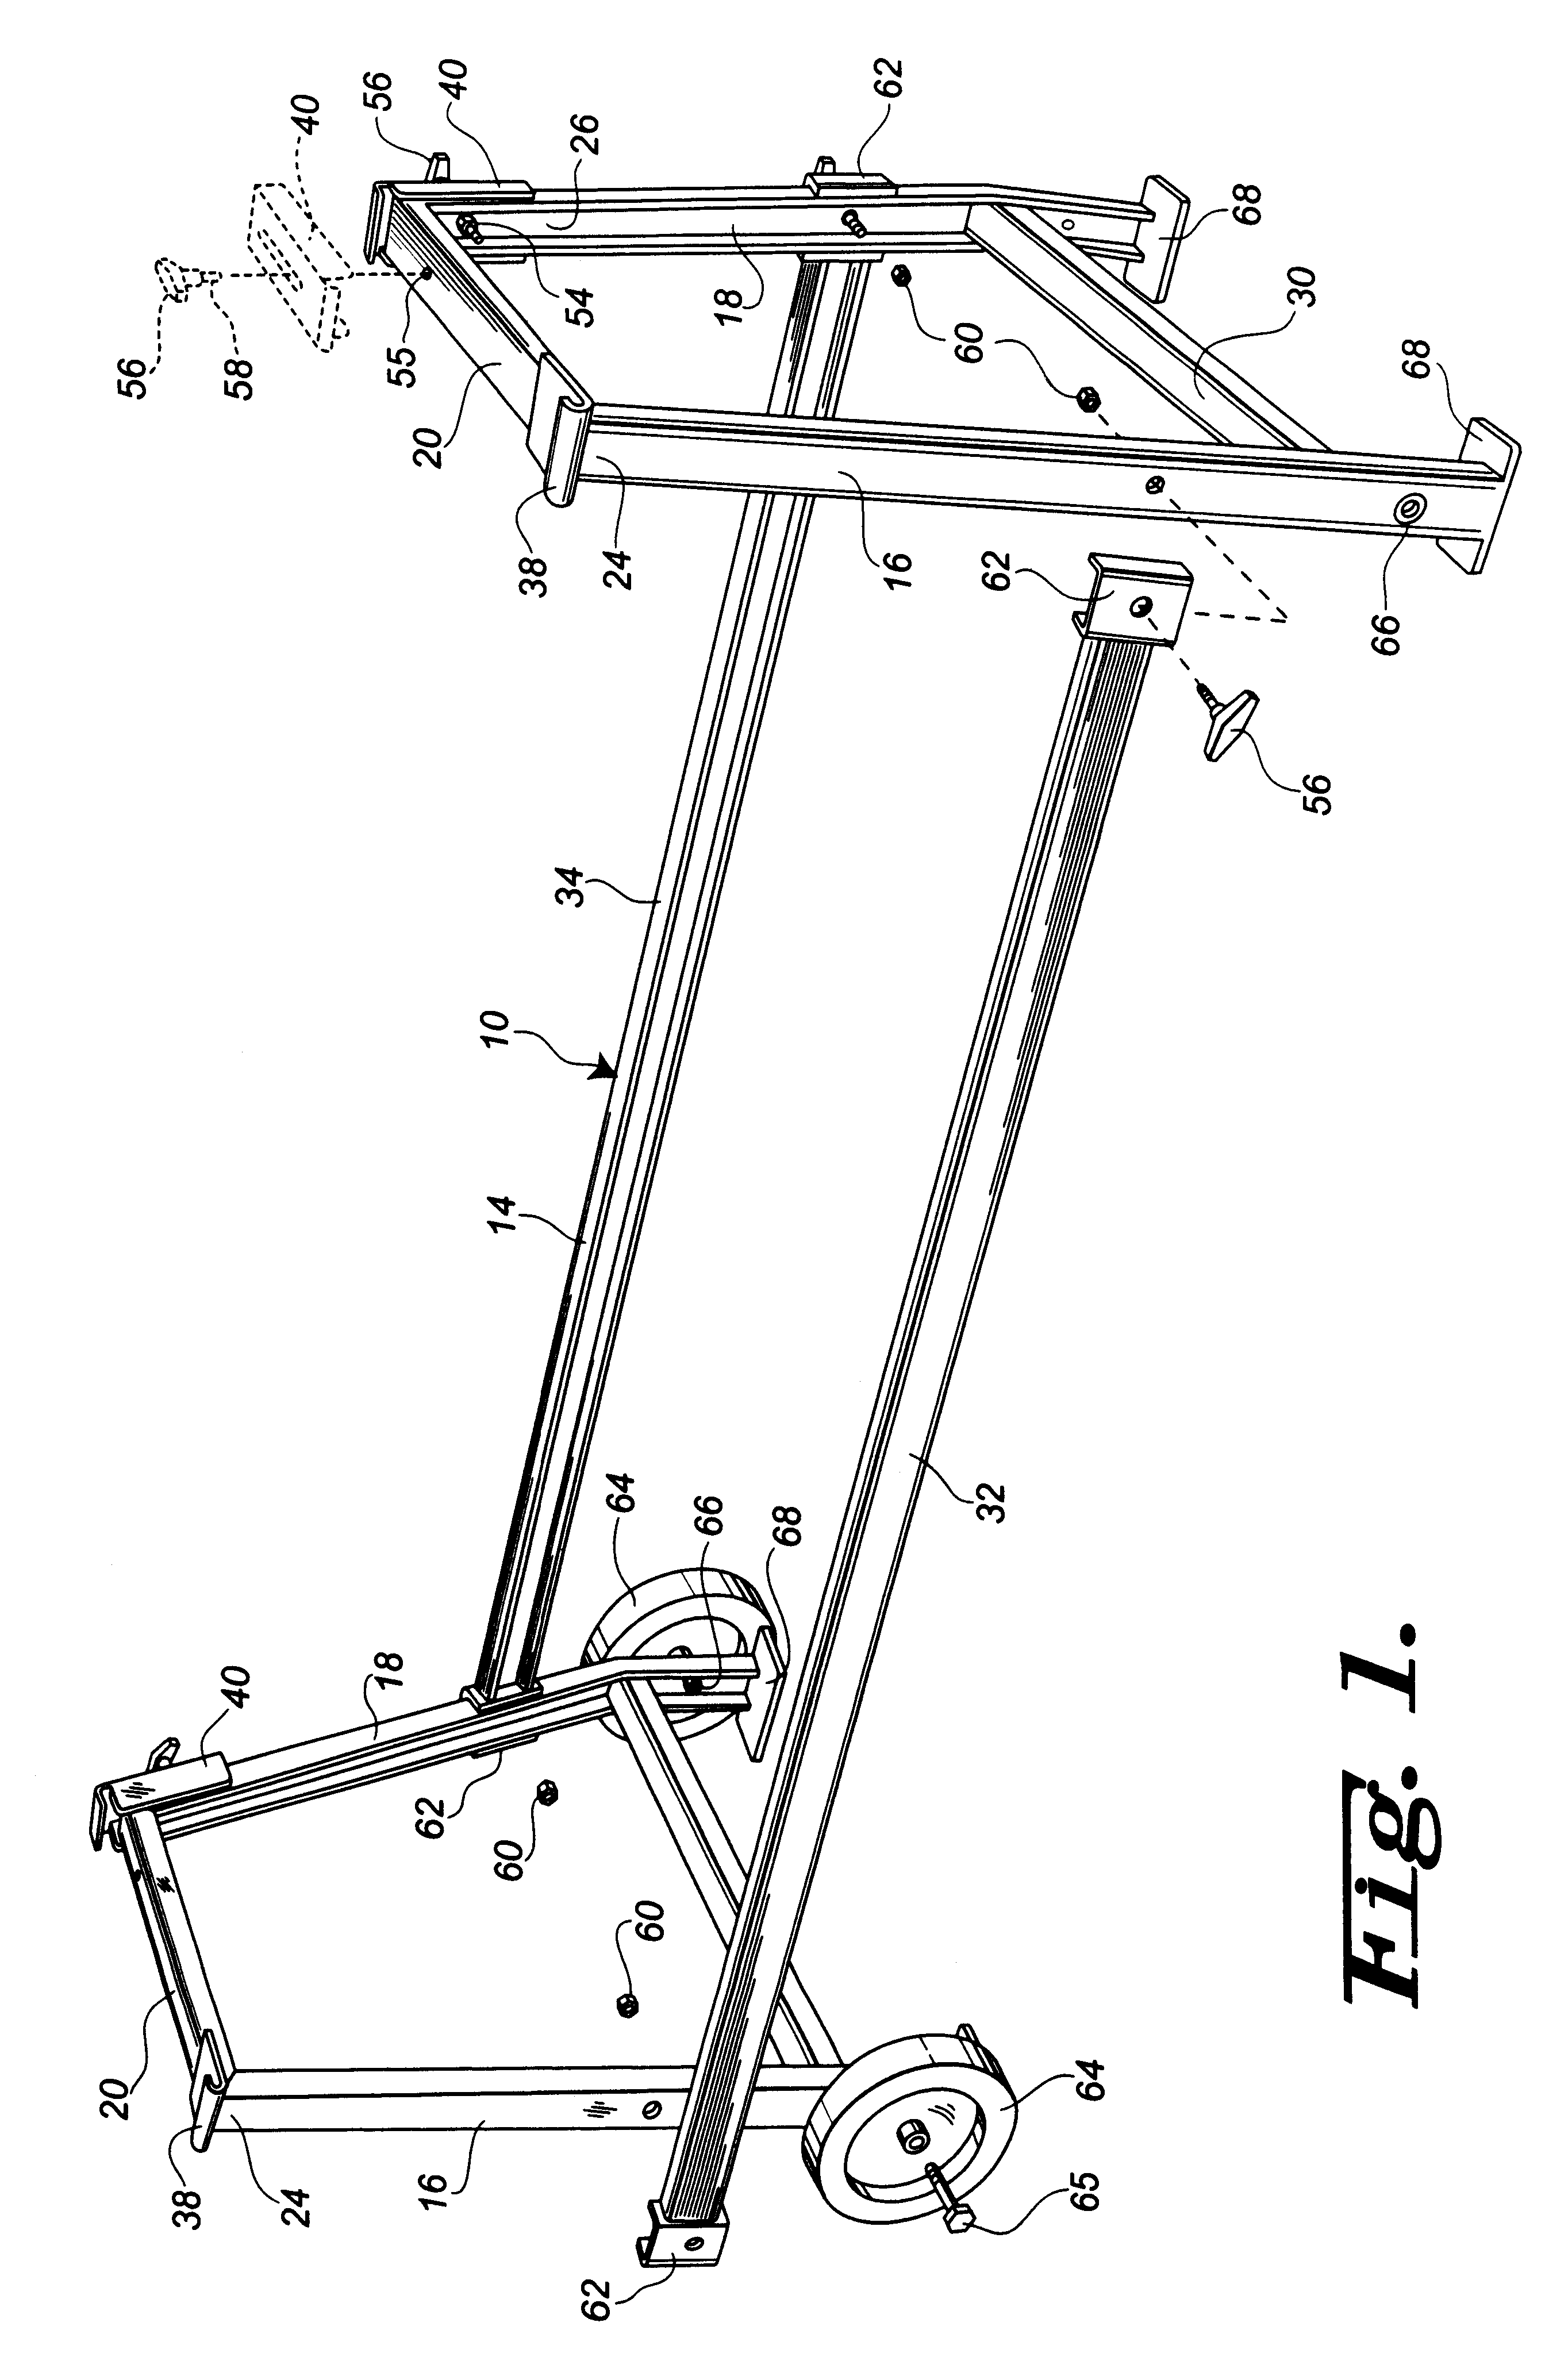 Sheet metal tool stand